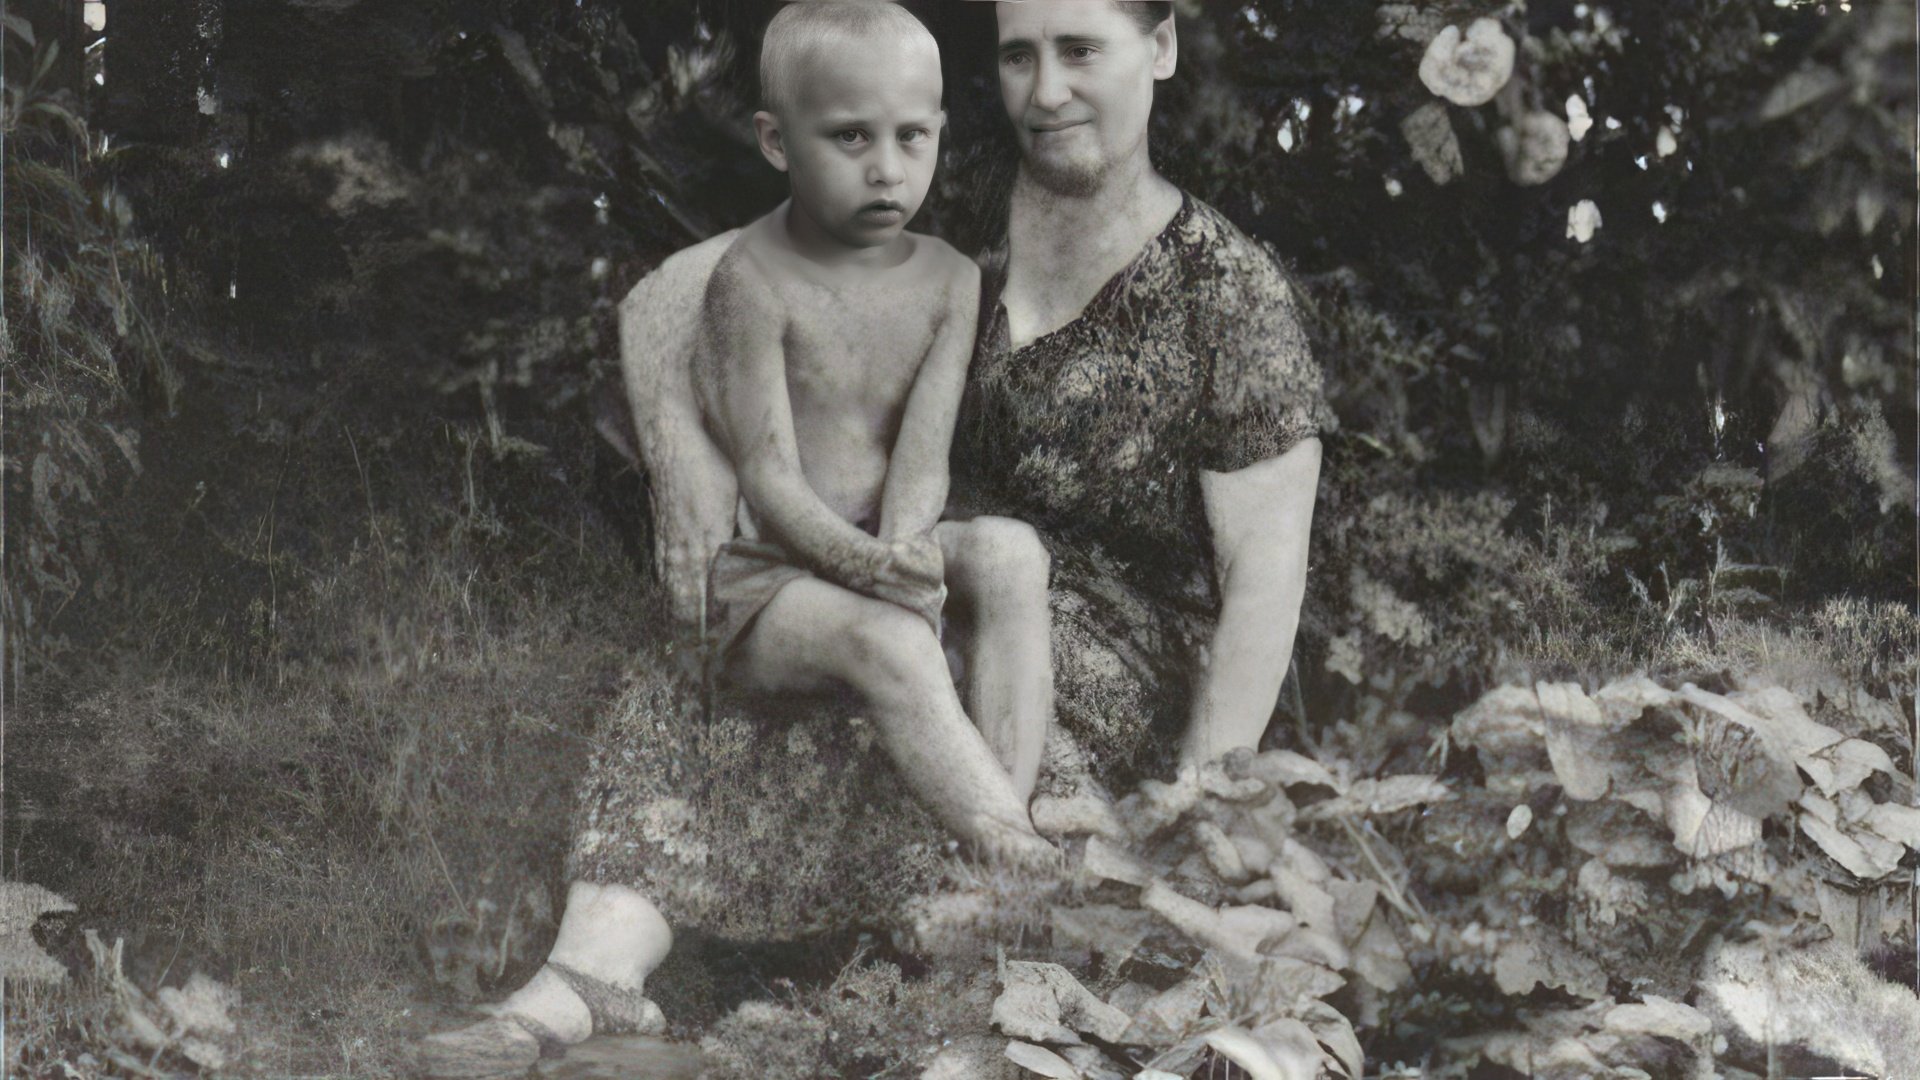 Vladimir Putin with his mother